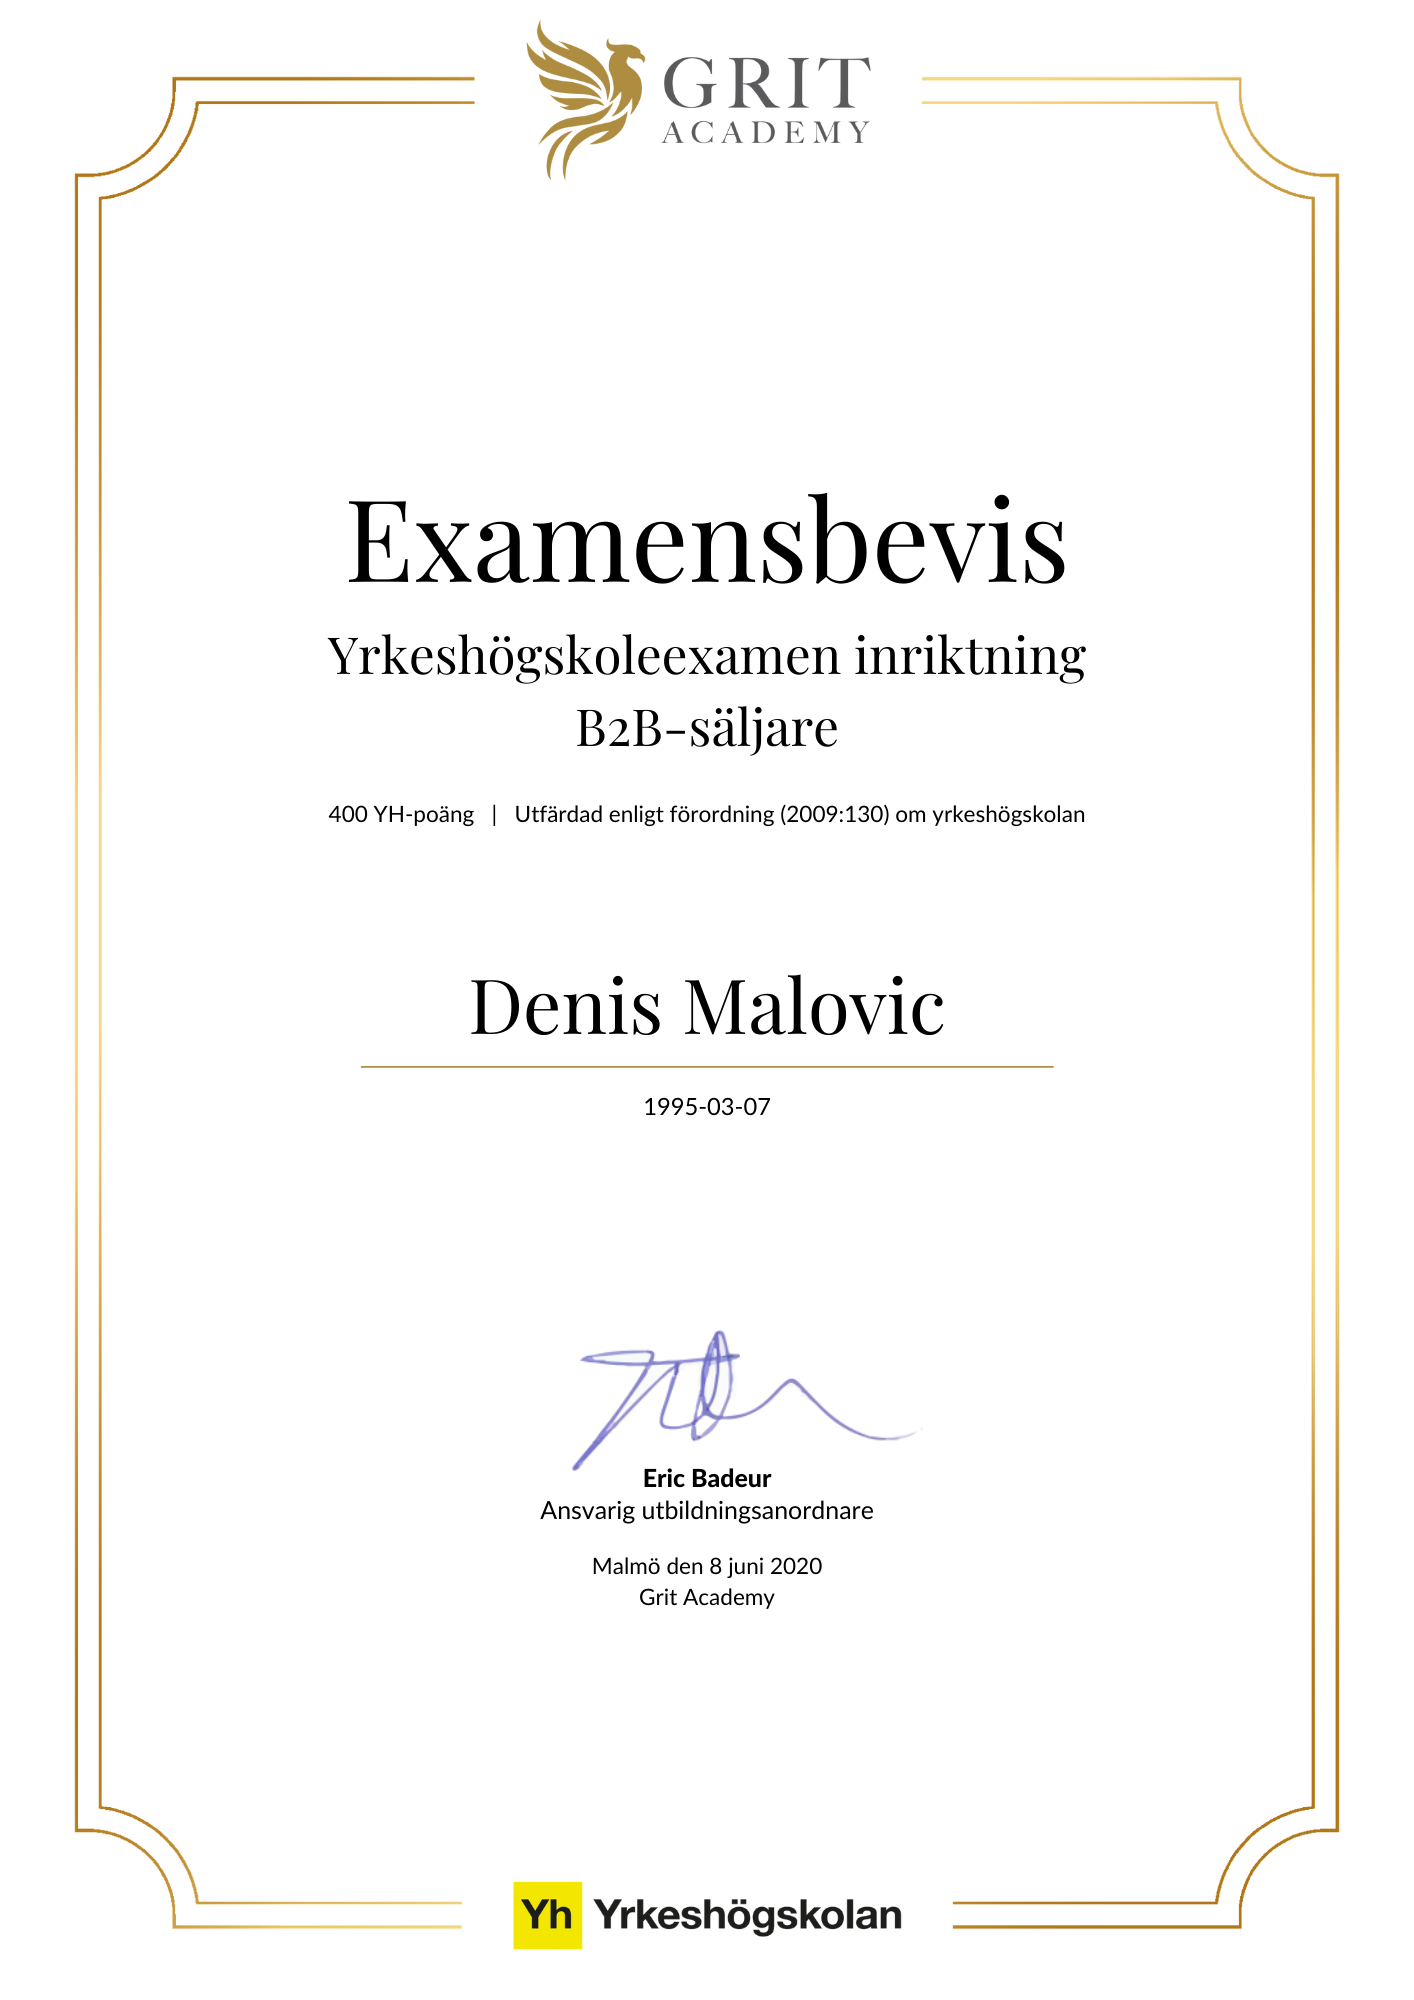 Examensbevis Denis Malovic - 1